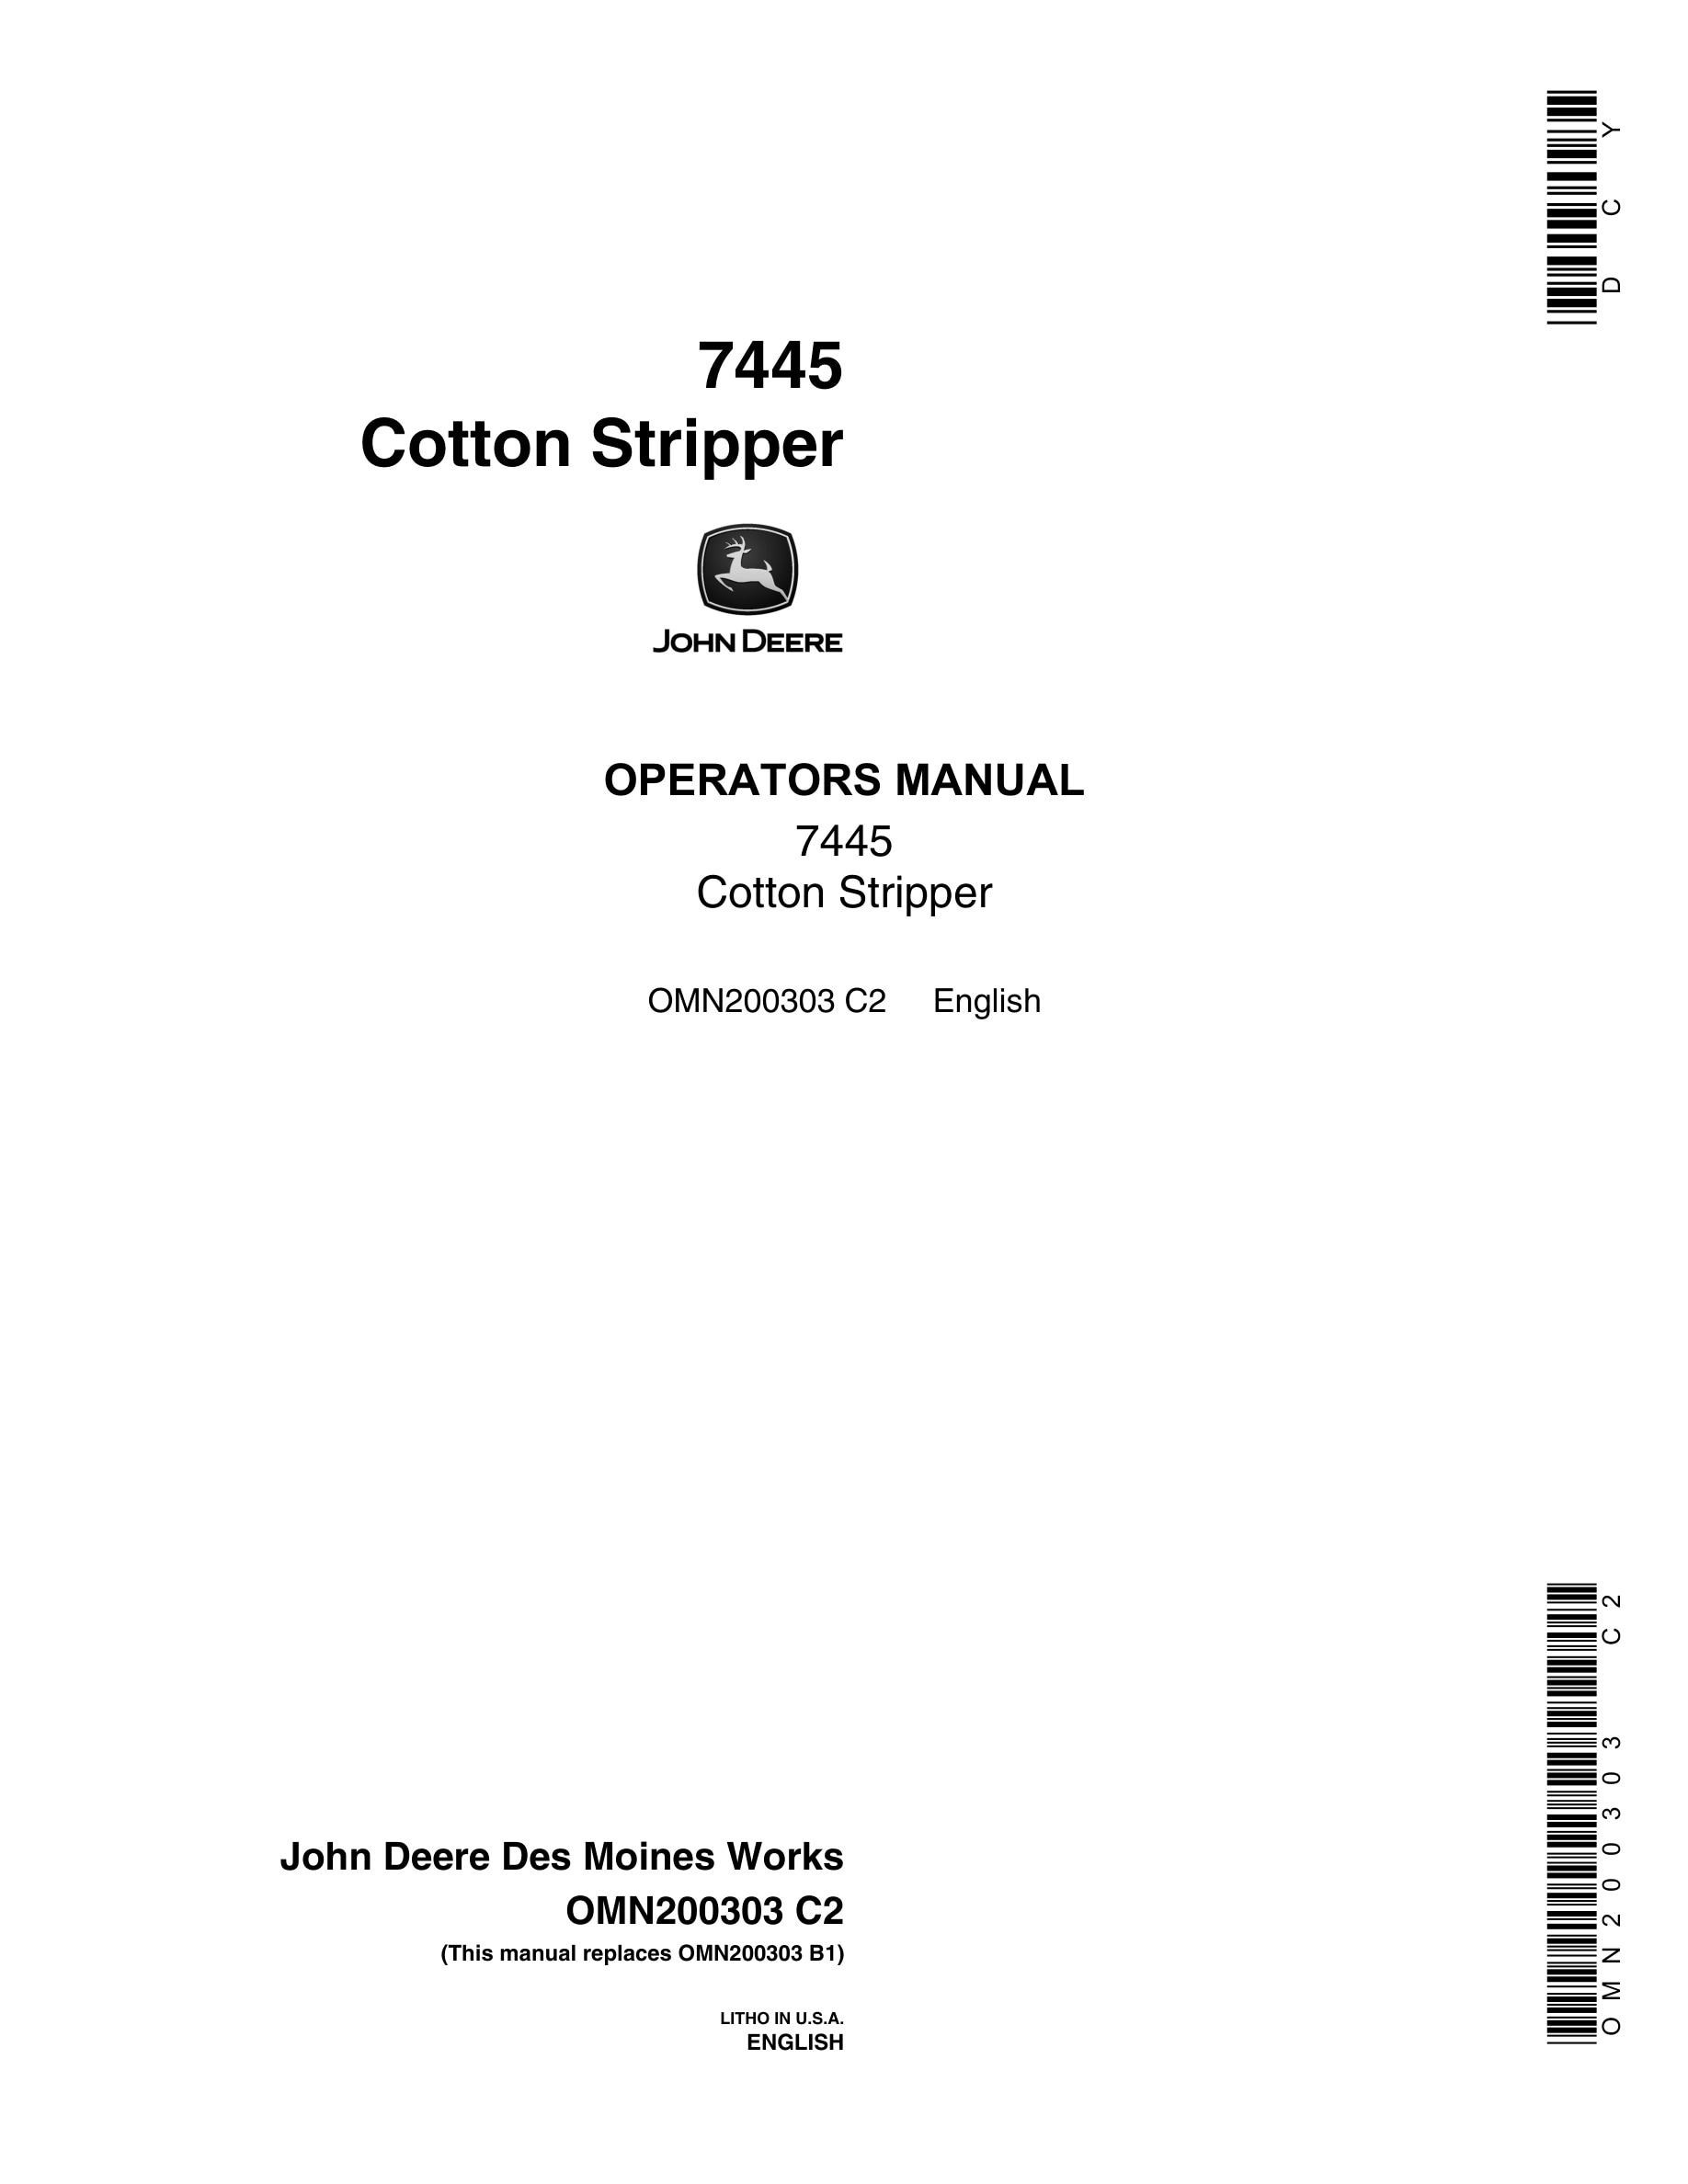 John Deere 7445Cotton Sripper Operator Manual OMN200303-1